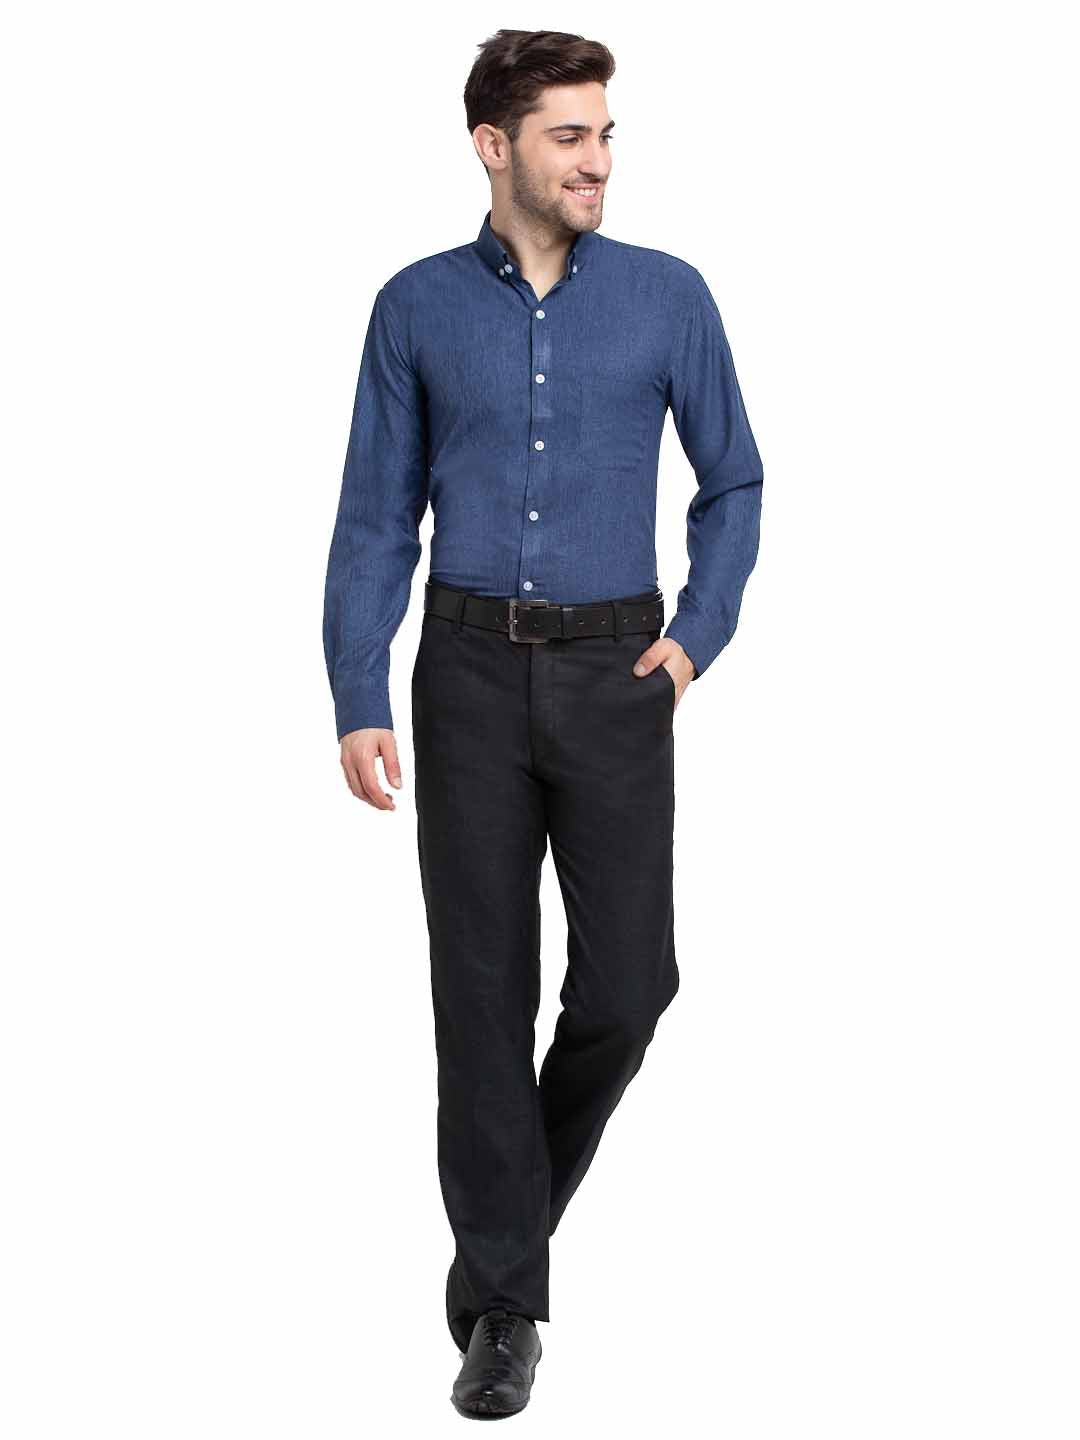 Men's Teal Button Down Collar Cotton Formal Shirt ( SF 785Teal ) - Jainish